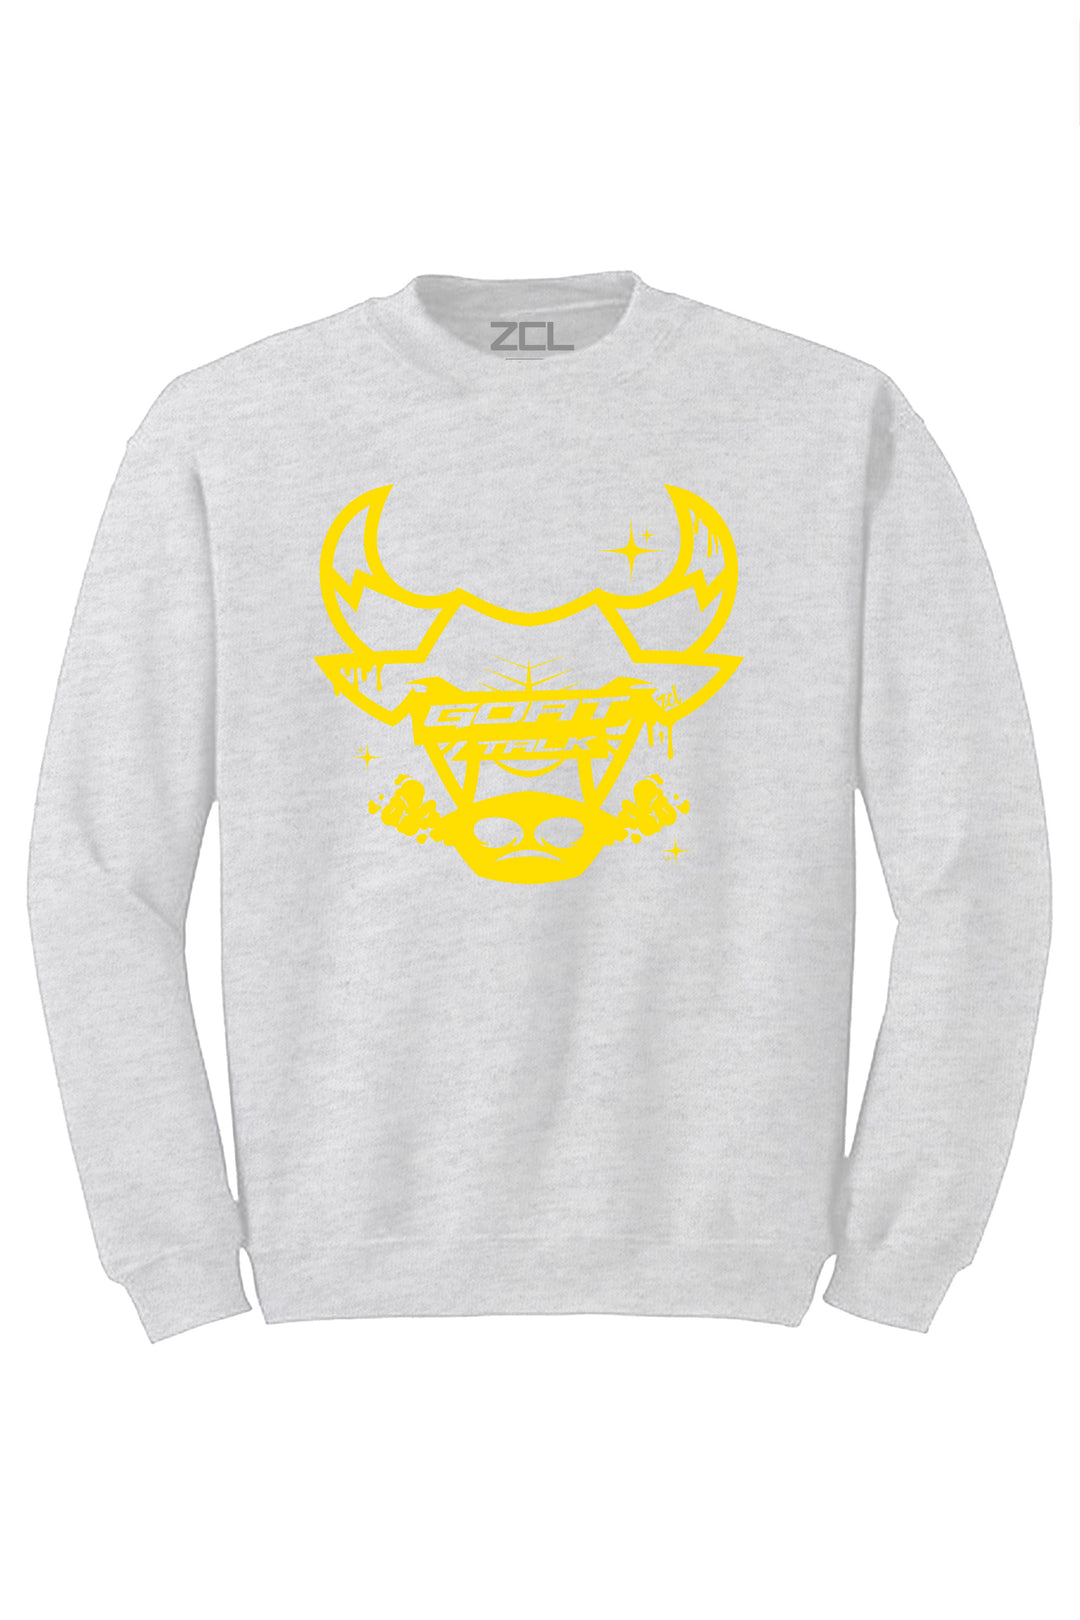 Goat Talk Crewneck Sweatshirt (Yellow Logo) - Zamage